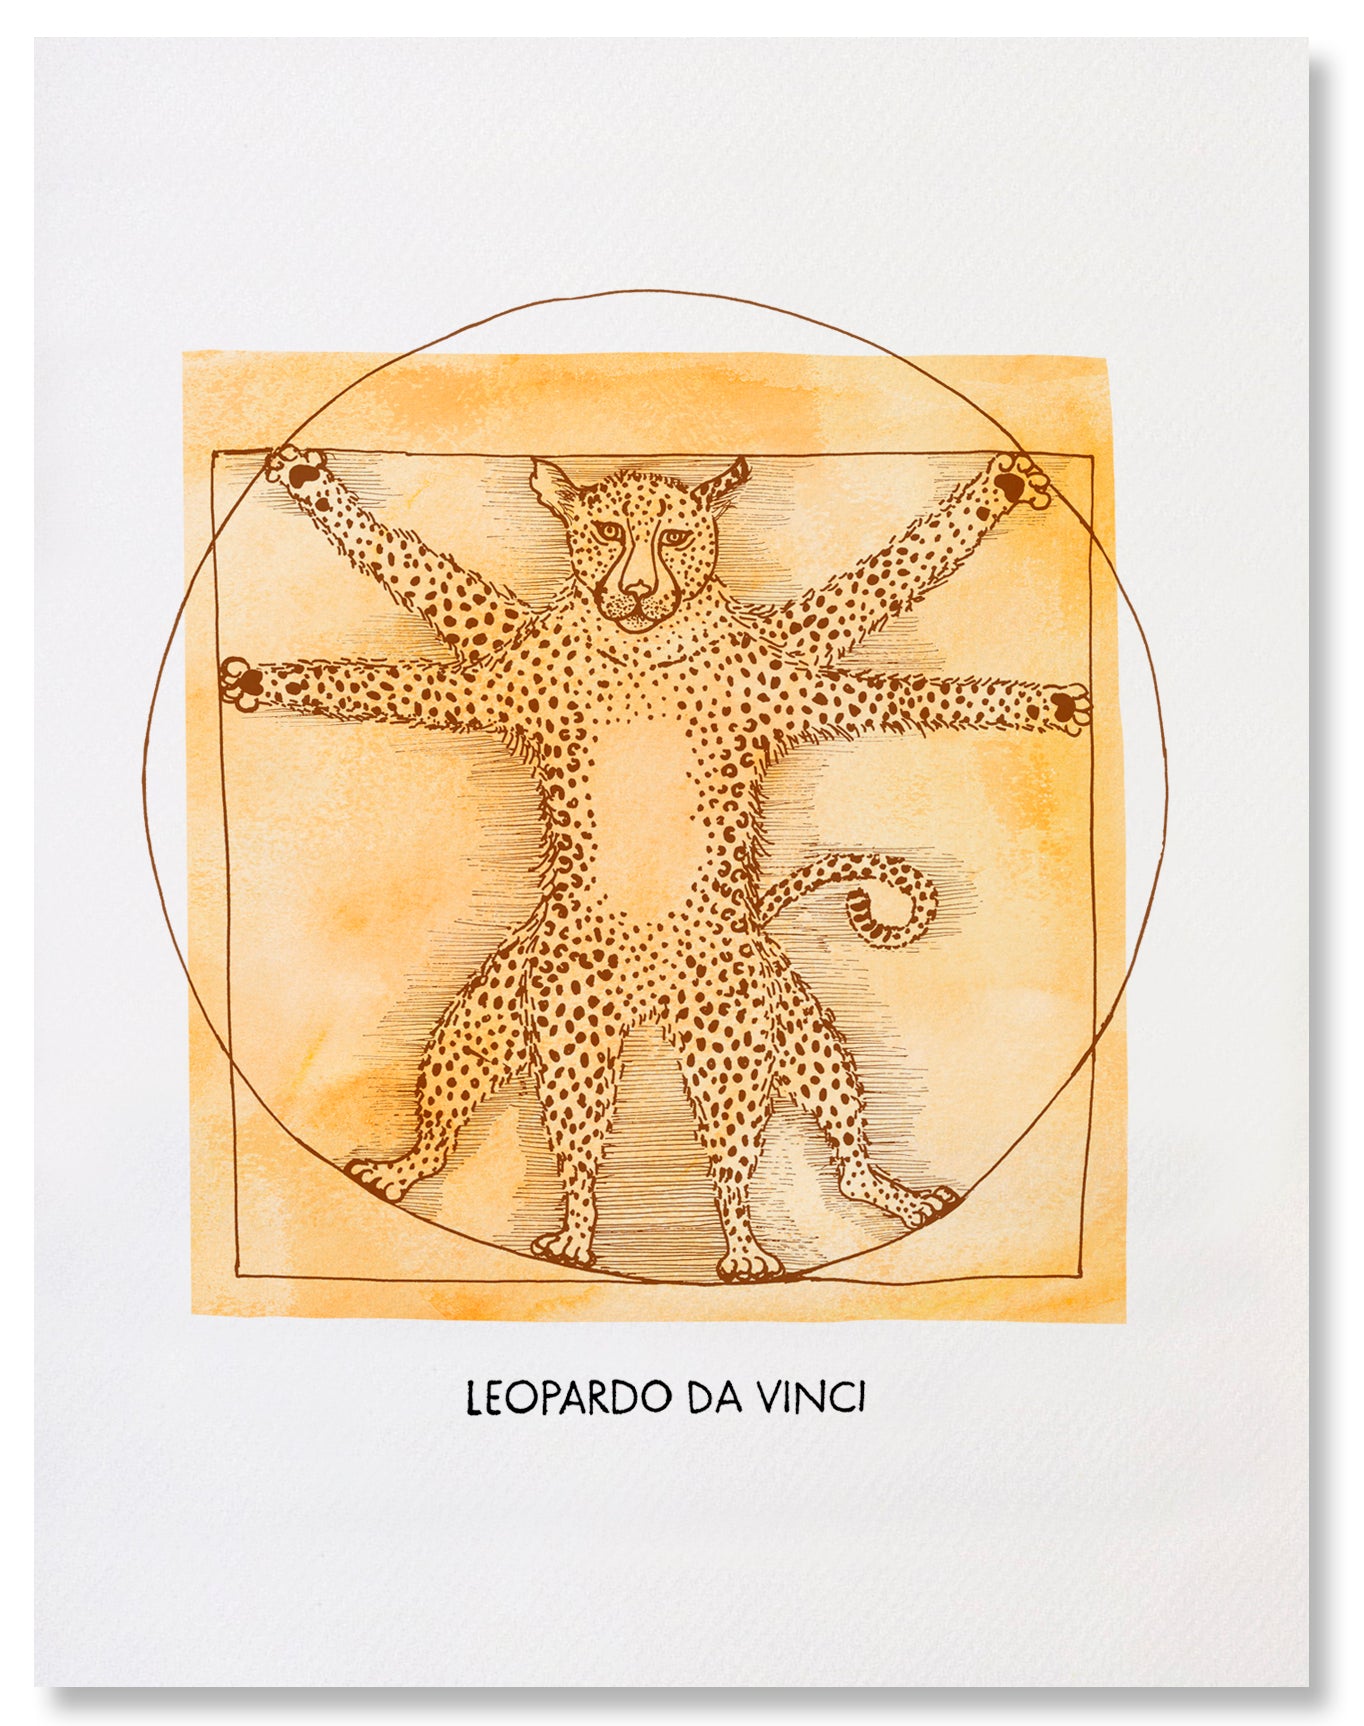 Leopardo da Vinci - Illustrated Funny Pun Everyday Card